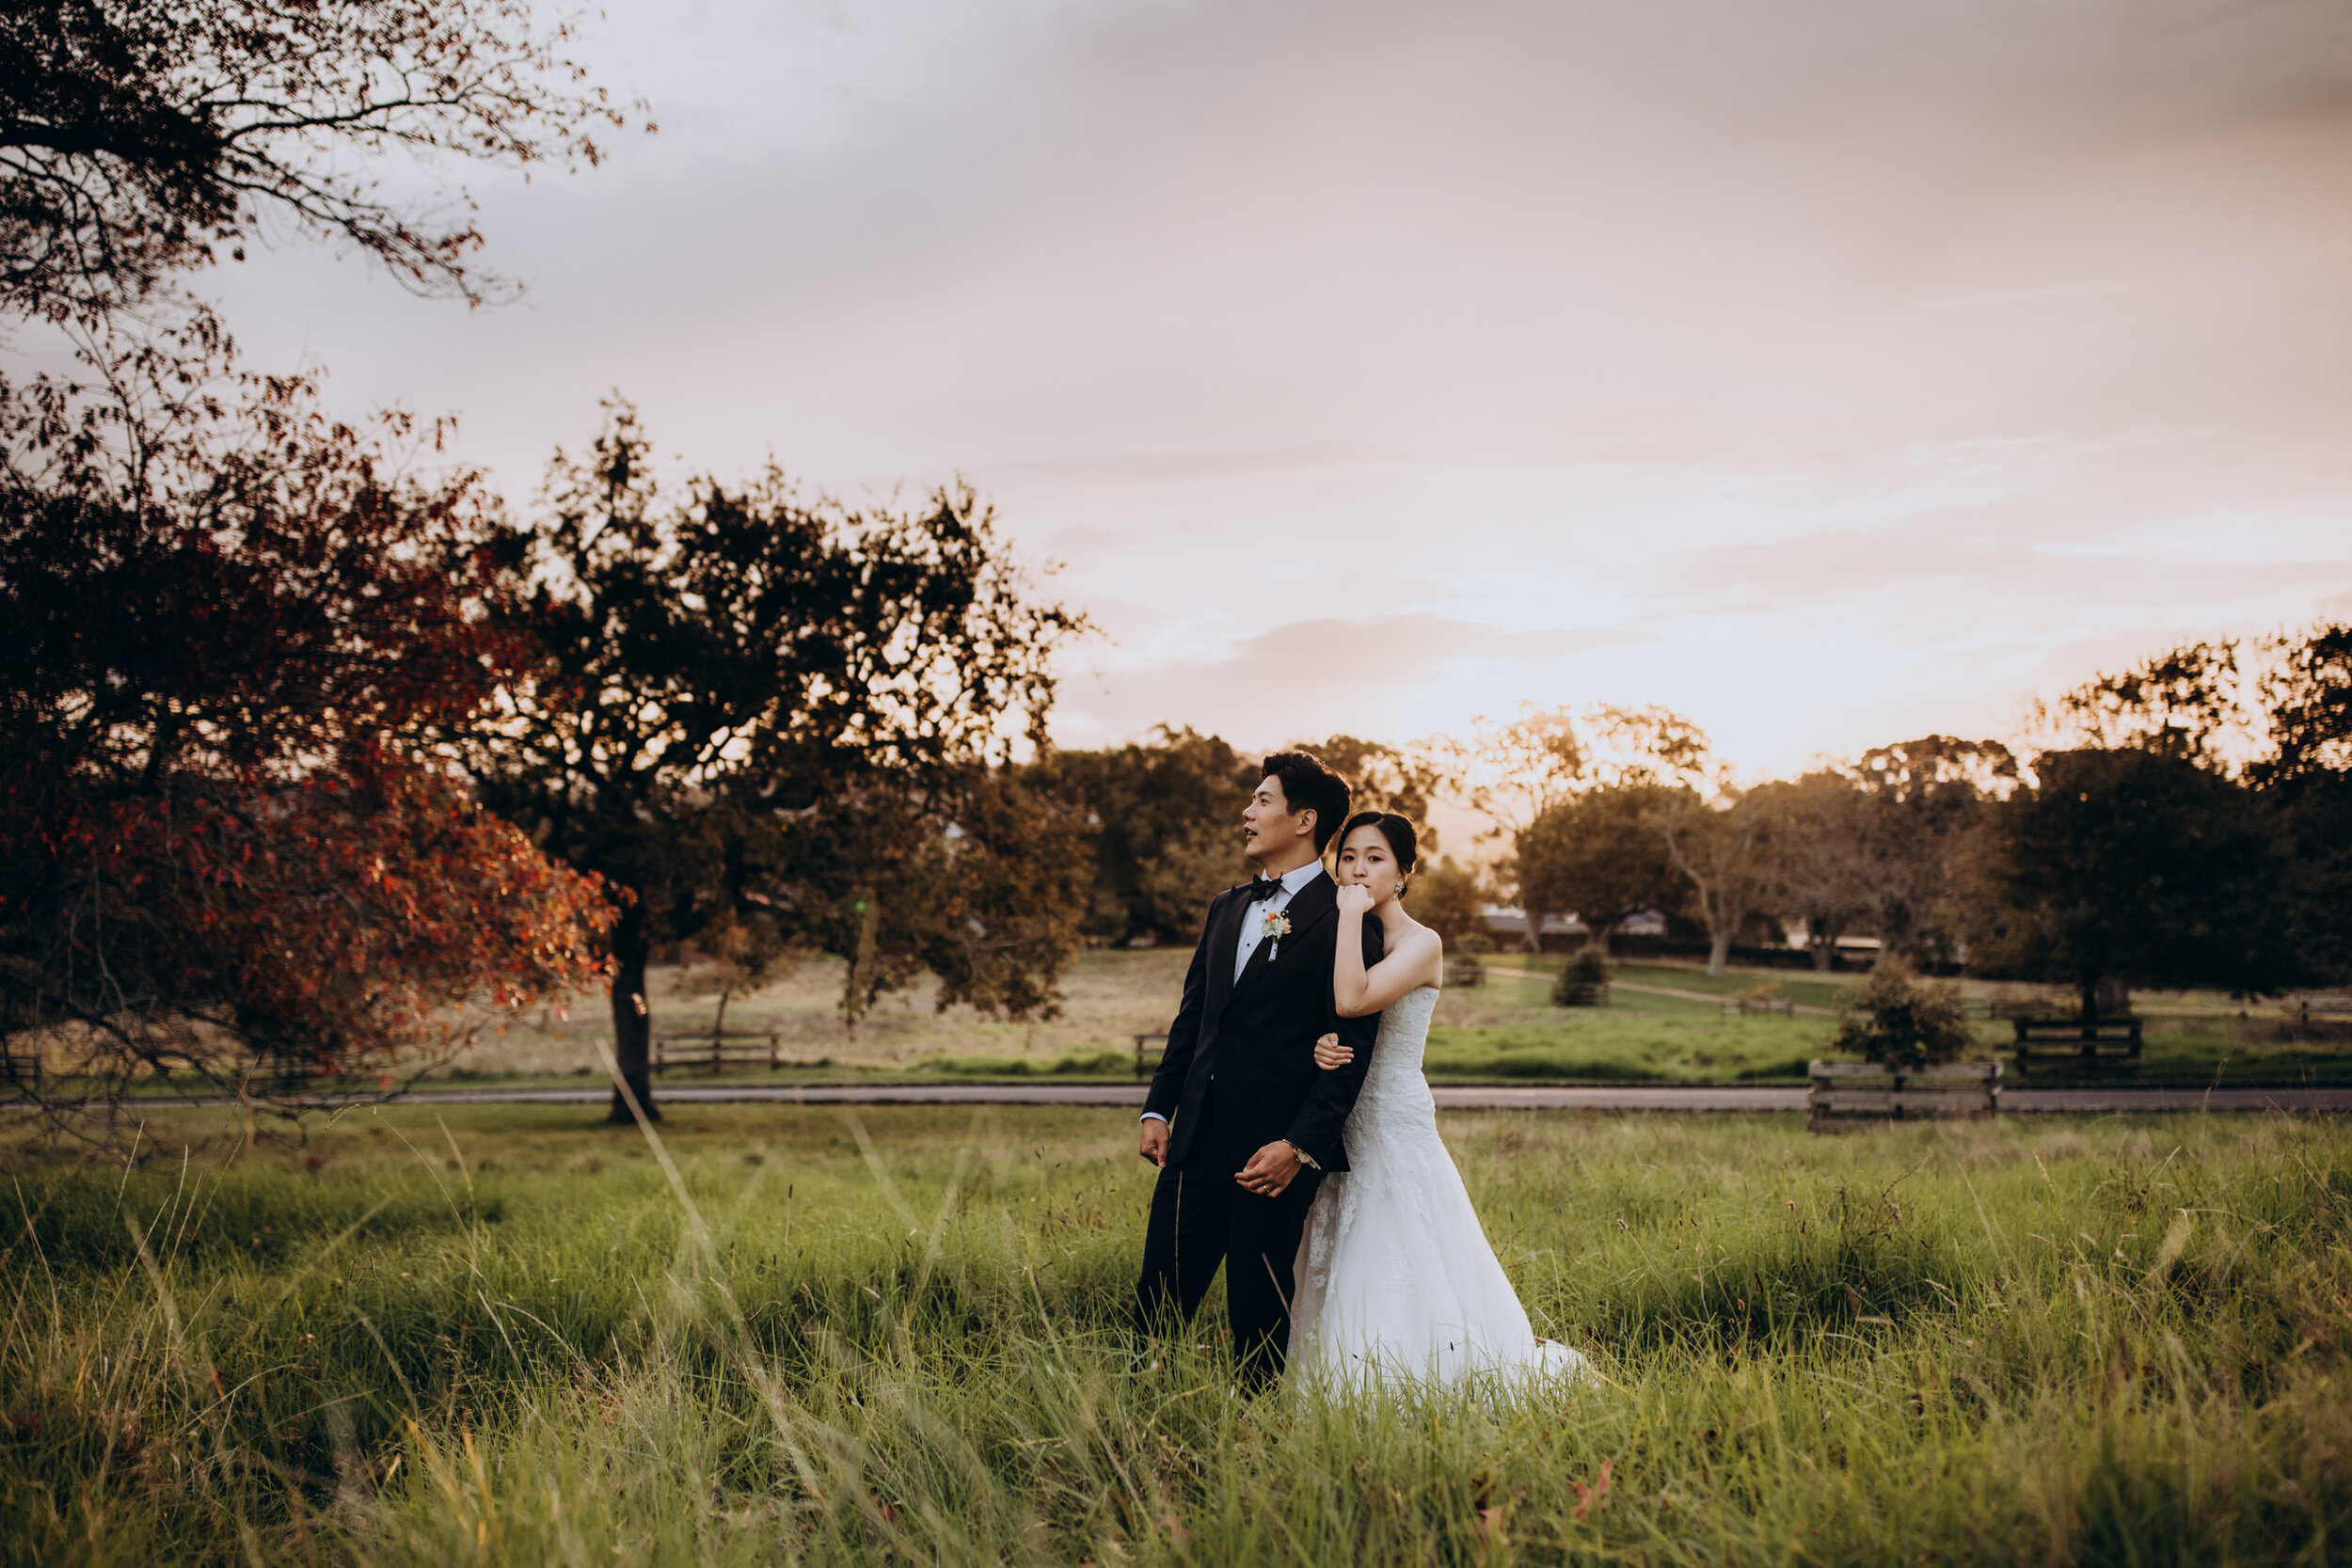 Sunset wedding photos | Auckland wedding | Sorrento in the park 